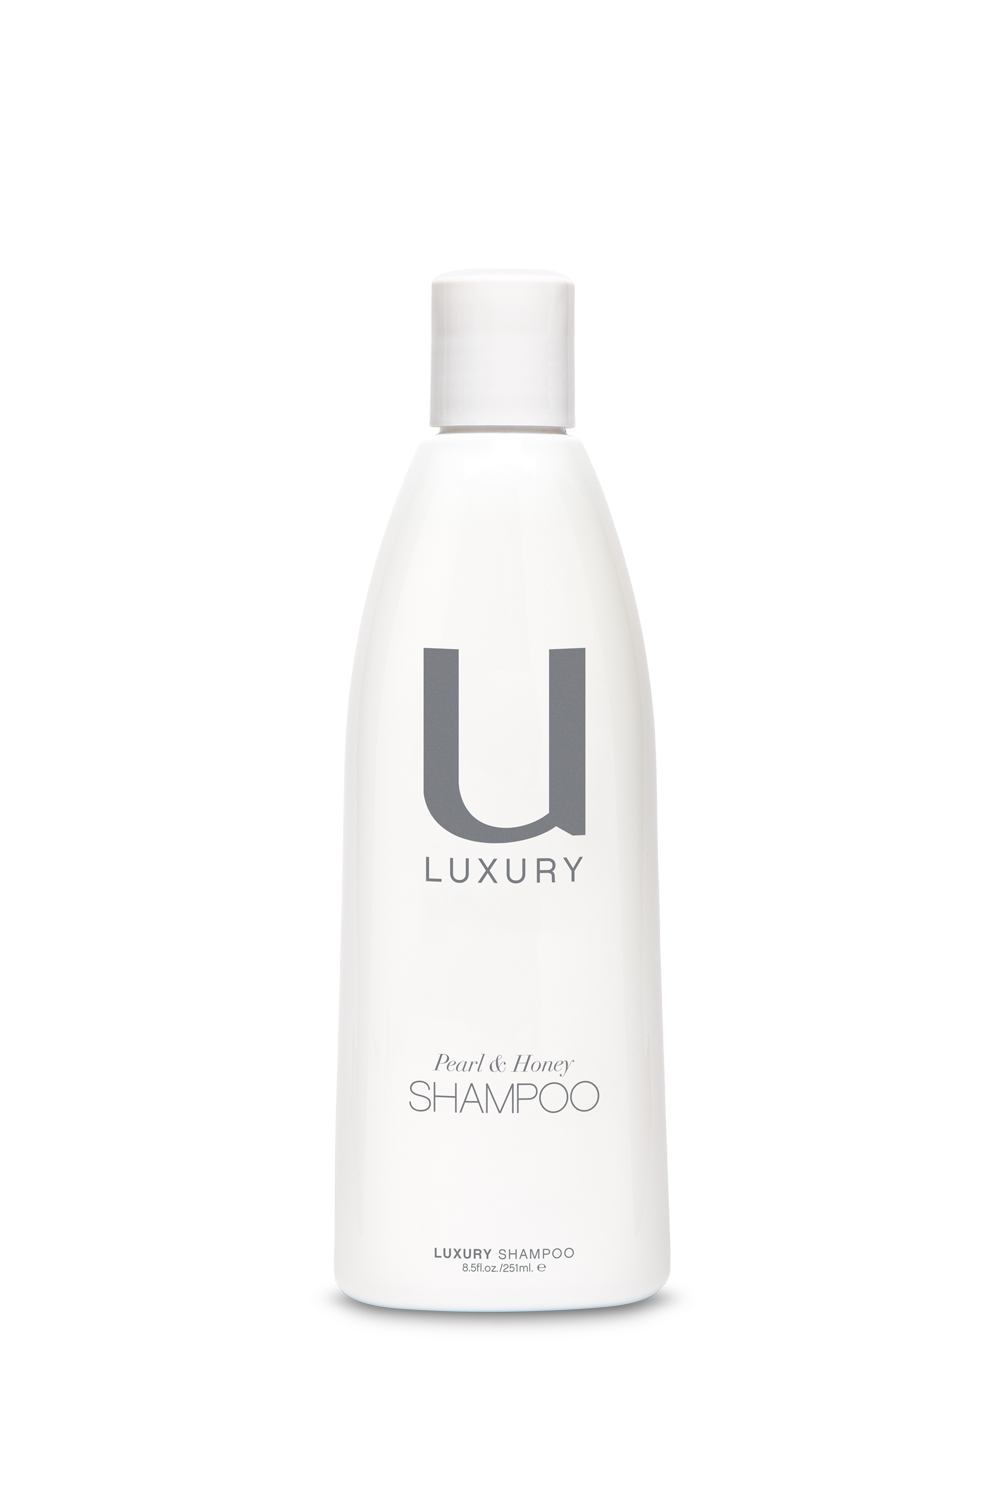 Unite U Luxury Shampoo 250ml